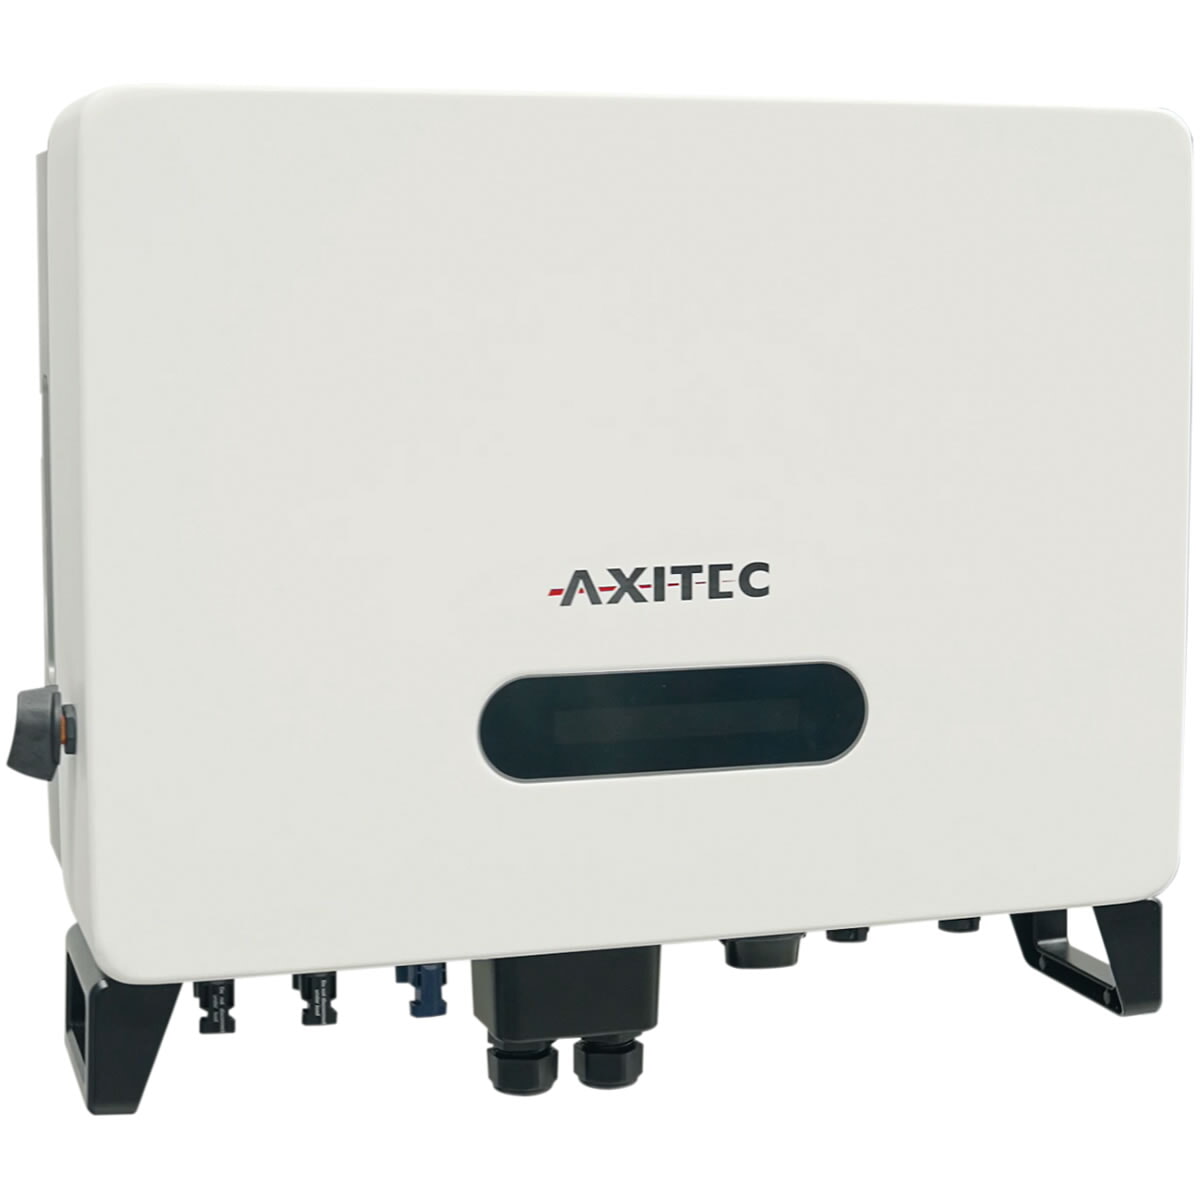 AXITEC Axihycon 6H Hybrid-Wechselrichter, 3-Phasig